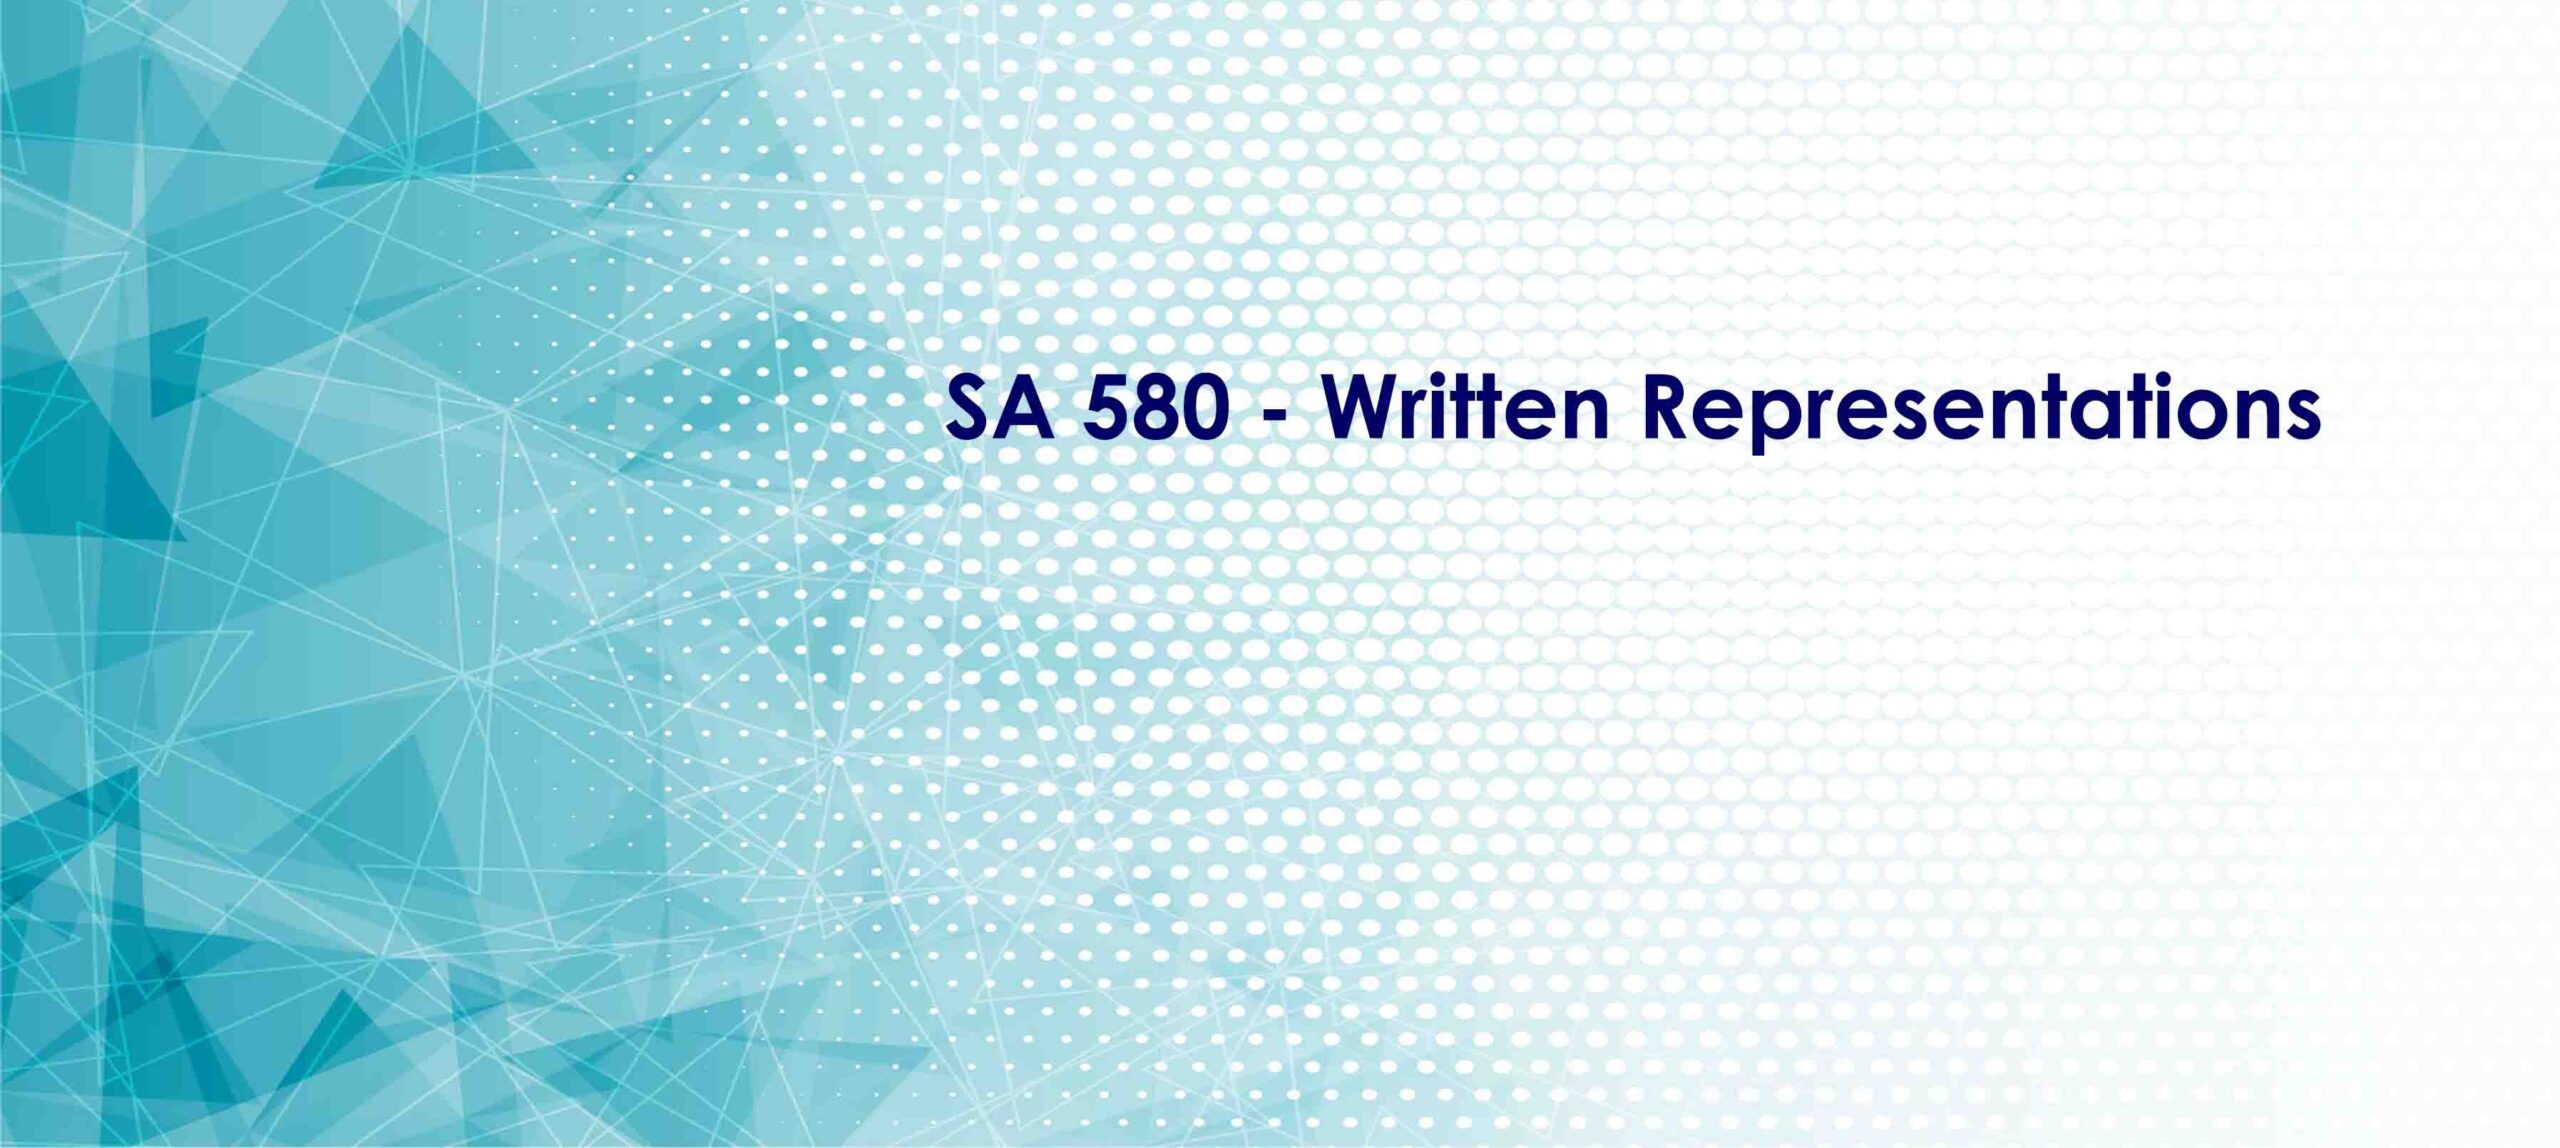 Written-Representations from management SA-580